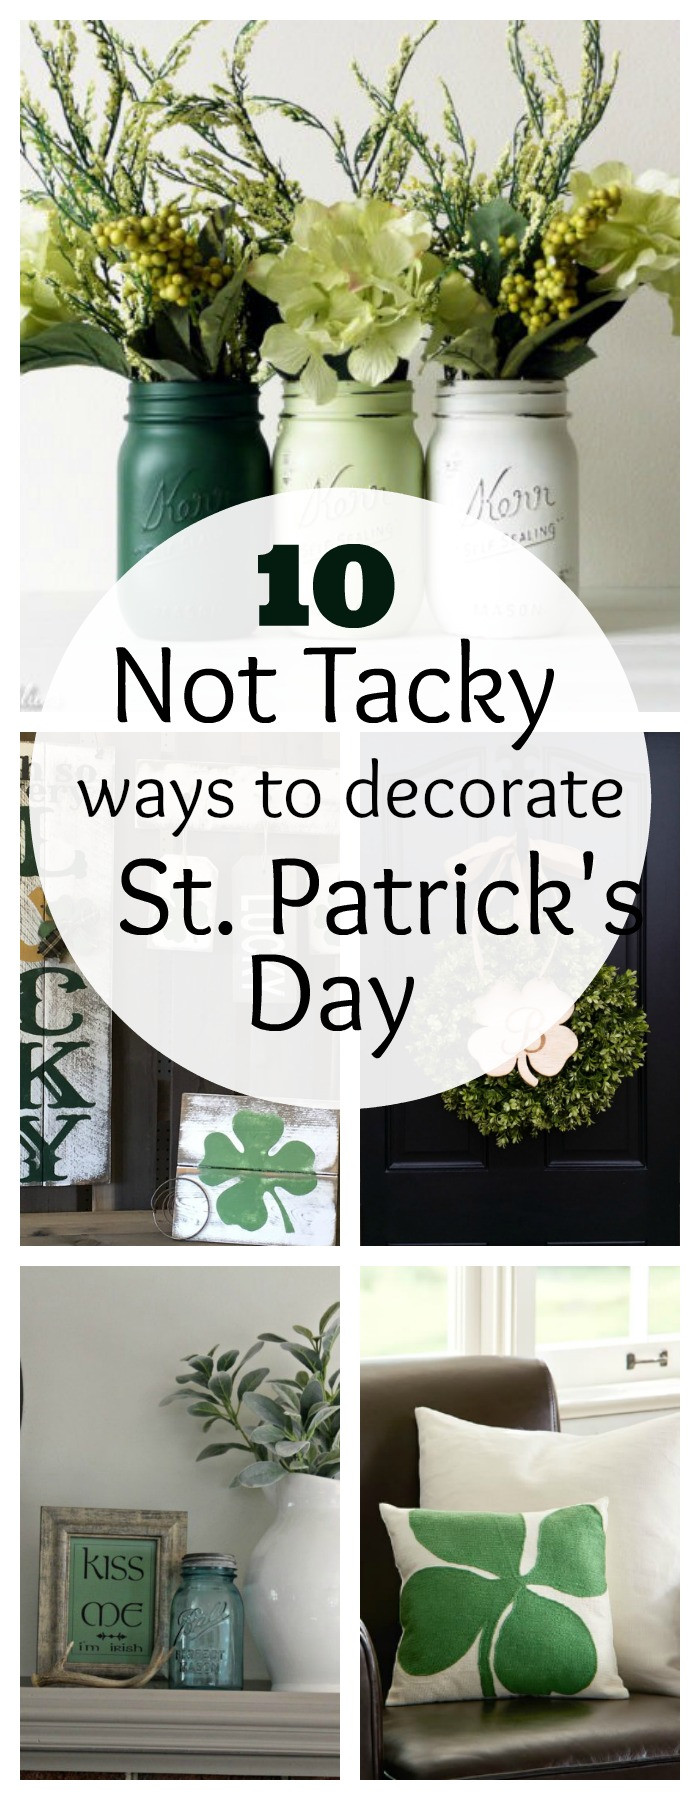 Diy St Patrick's Day Decorations
 10 Not Tacky Ways to Decorate for St Patrick s Day The